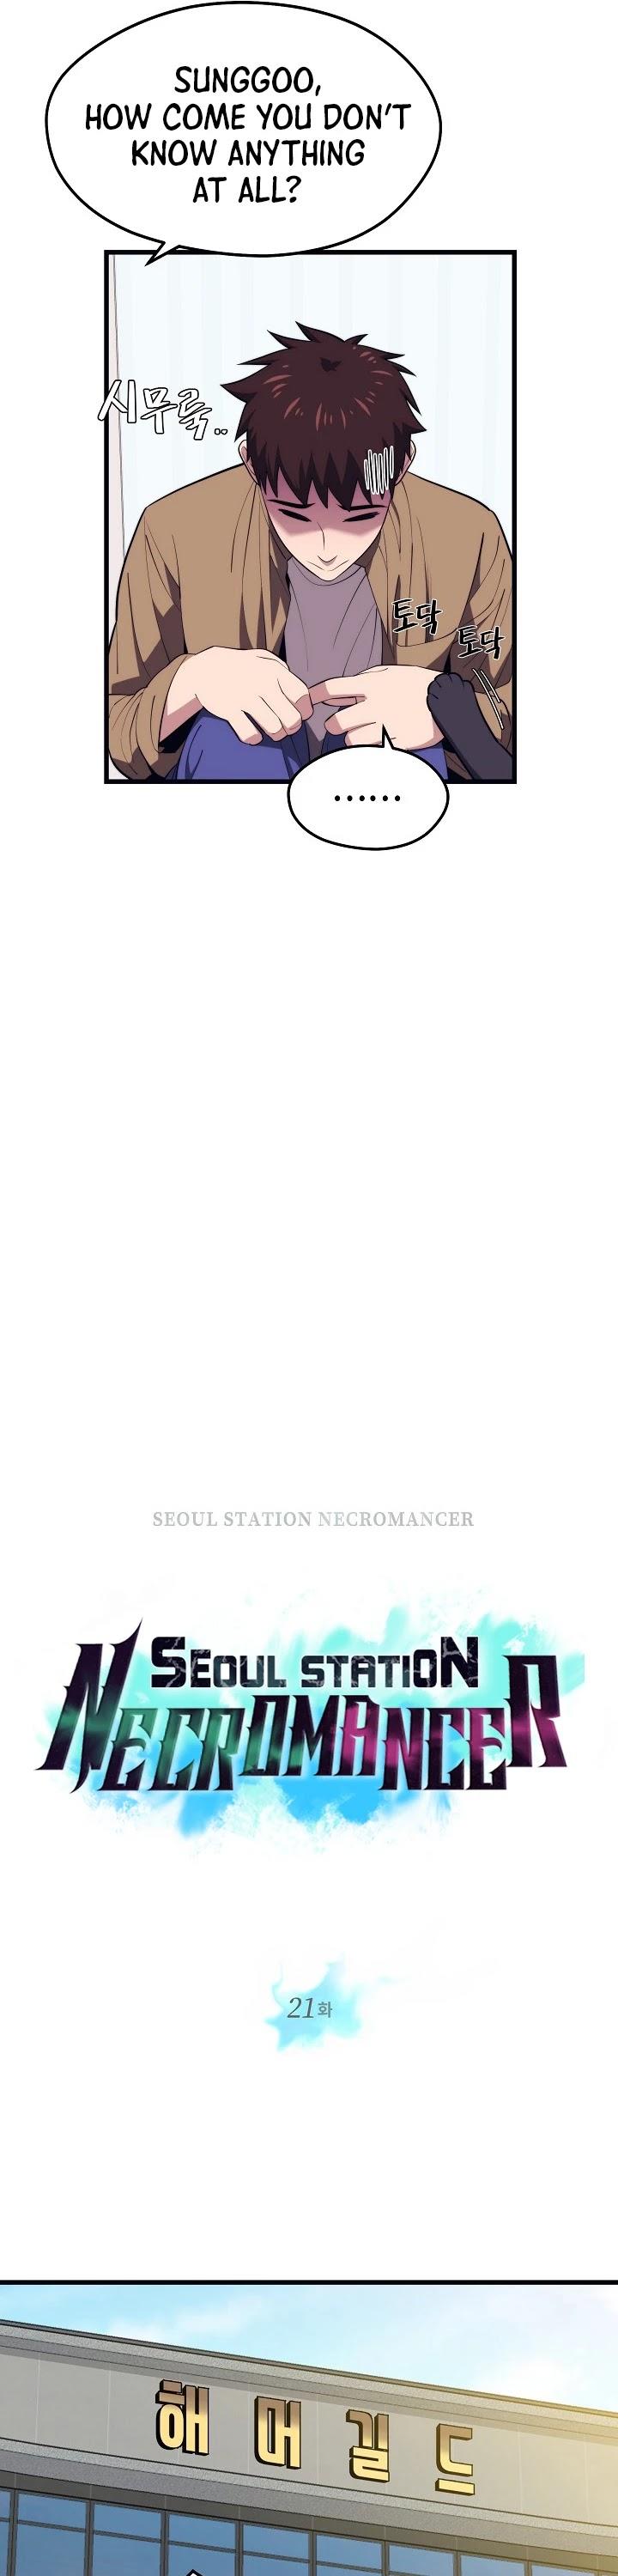 Read Seoul Station's Necromancer Seoul Station's Necromancer Chapter 21 8